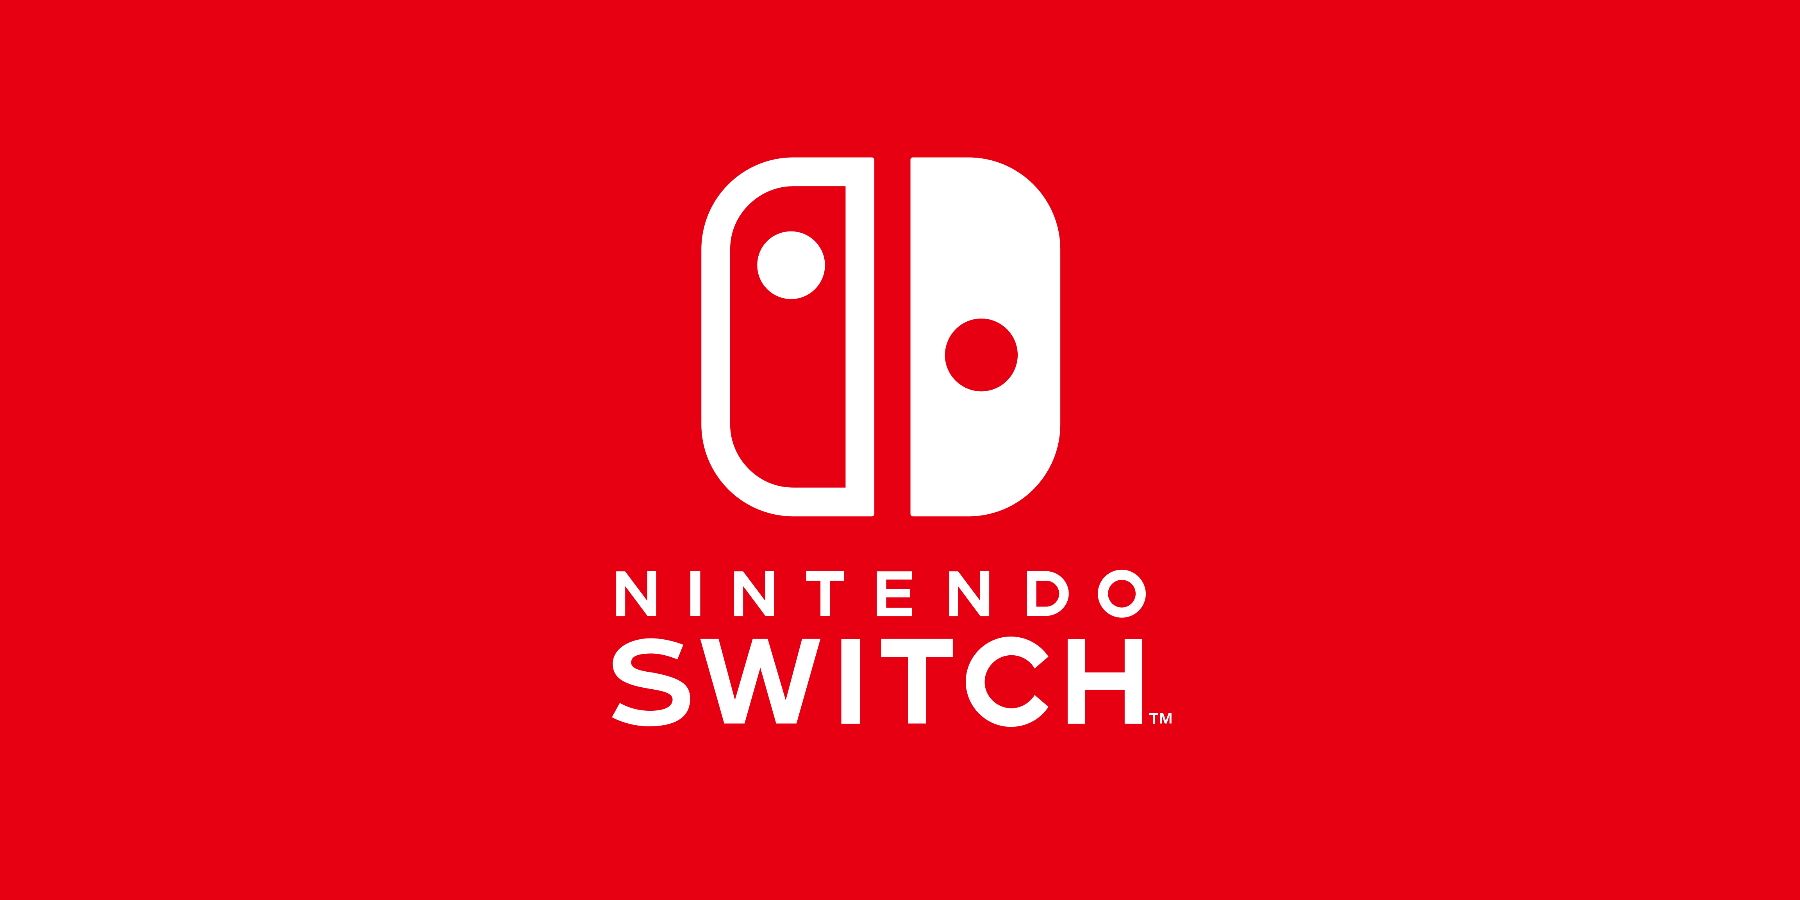 nintendo drops new trailer for switch exclusive releasing june 27